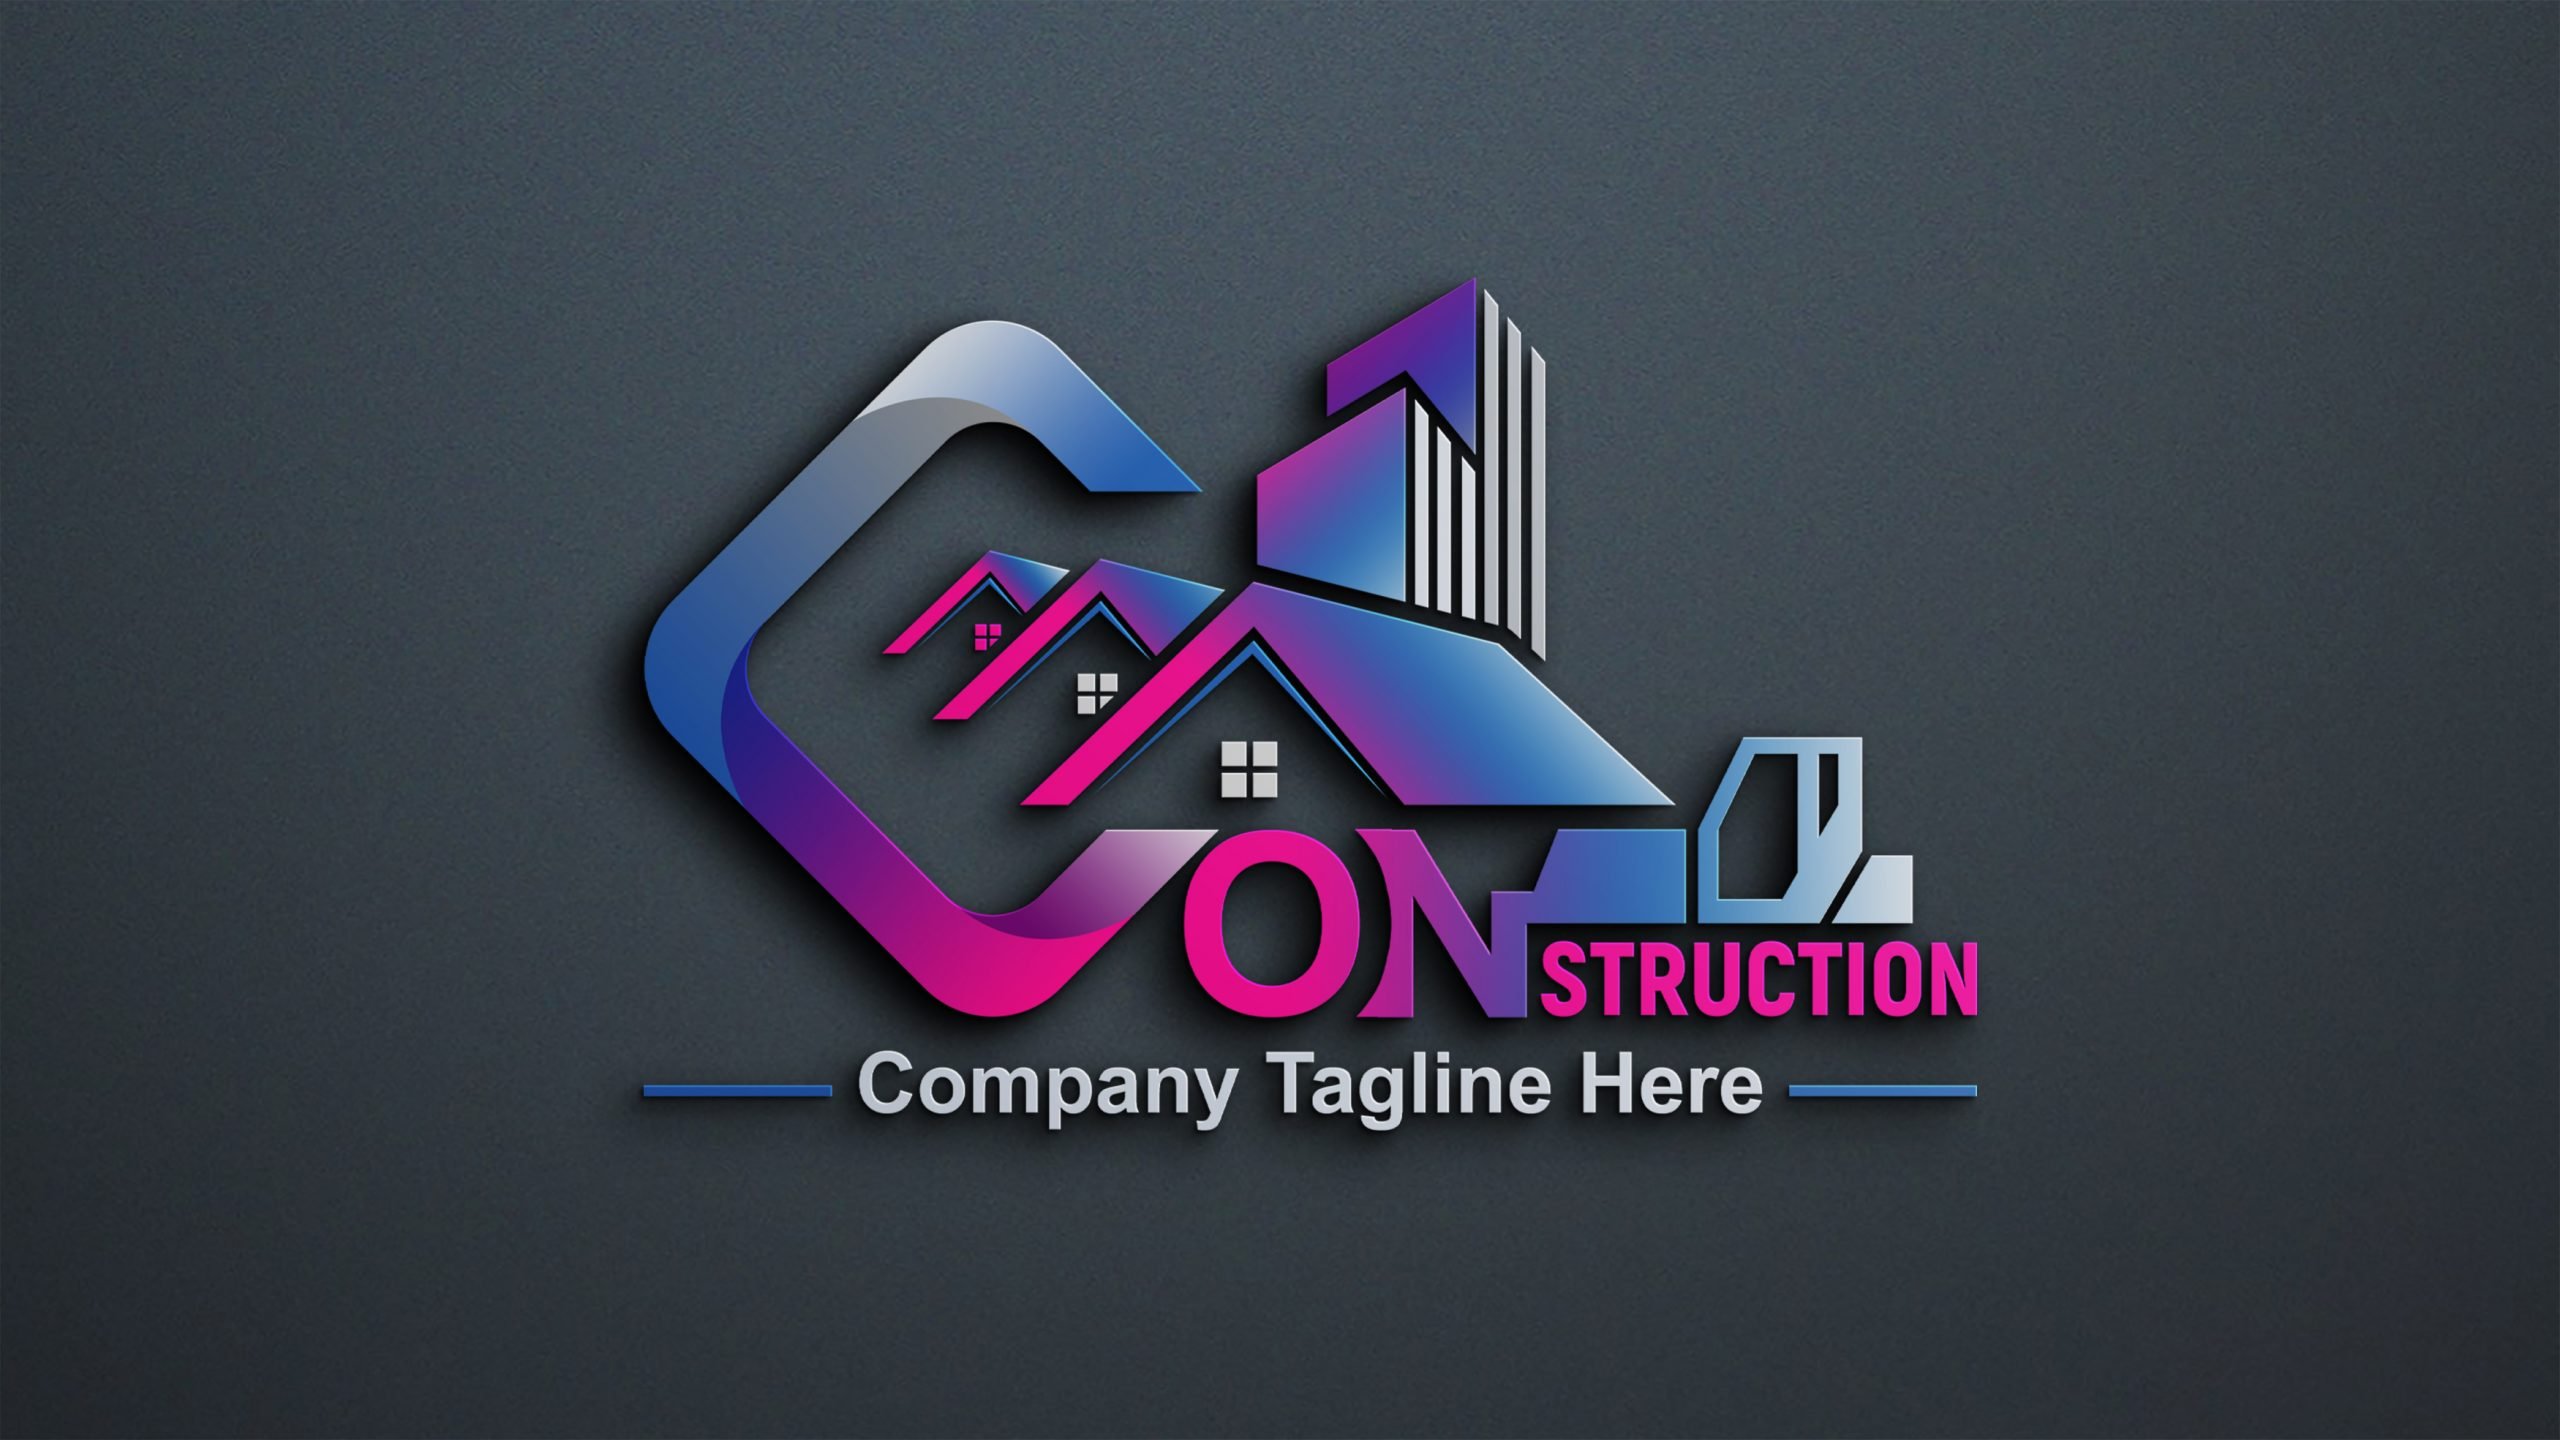 Construction Company, Contractor, Handyman Logo Design Template